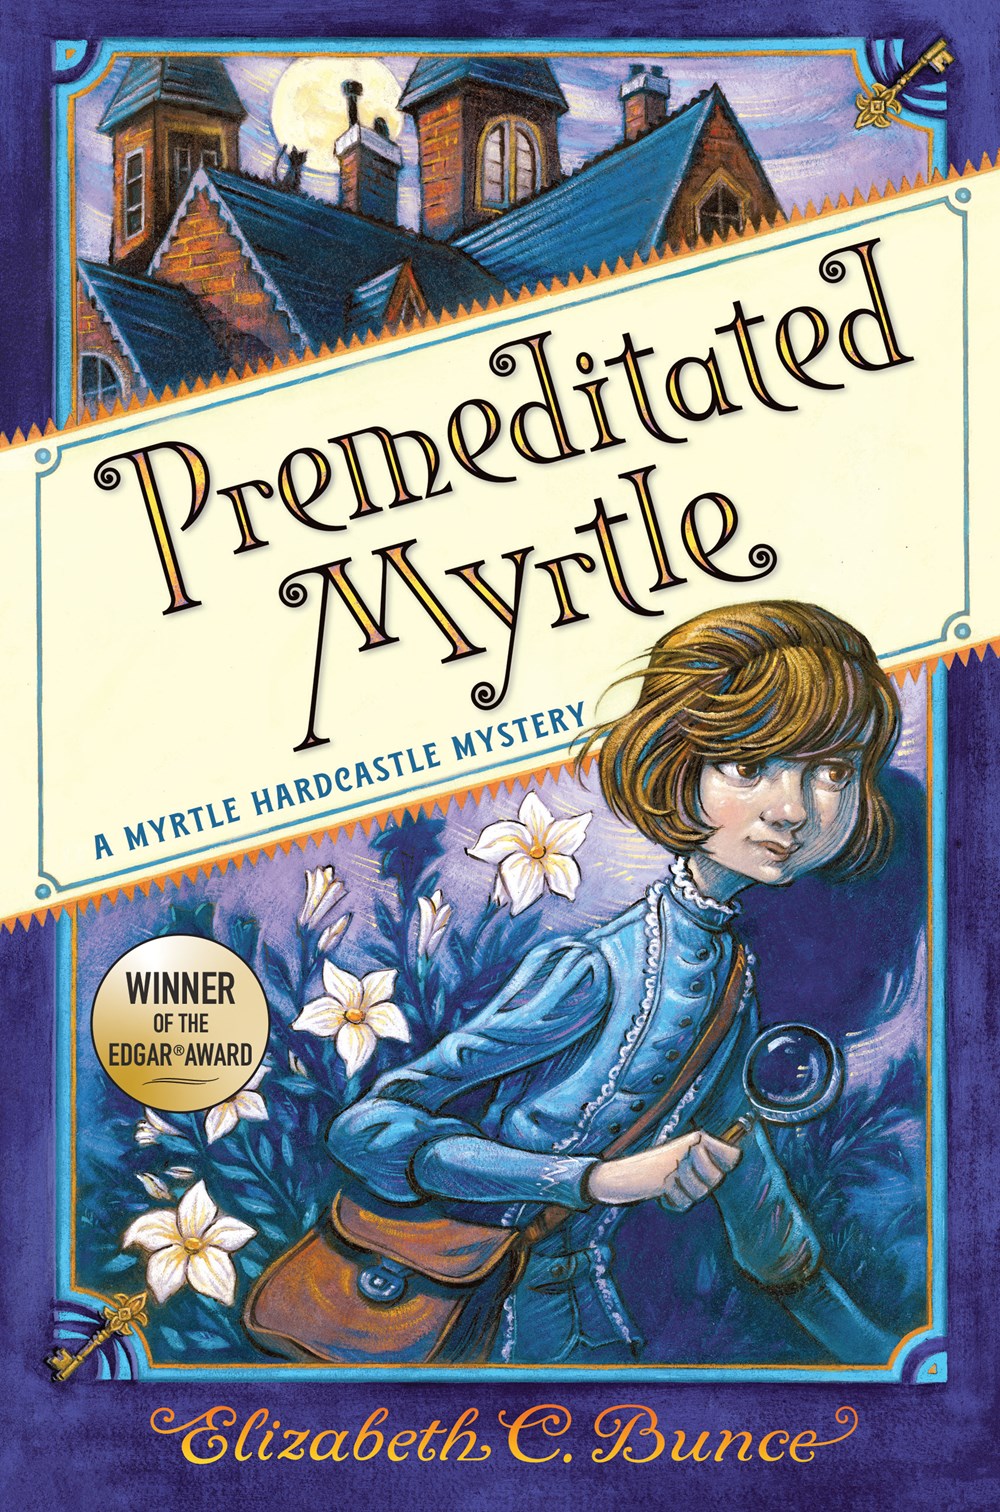 Premeditated Myrtle (Hardcastle Mystery 1)